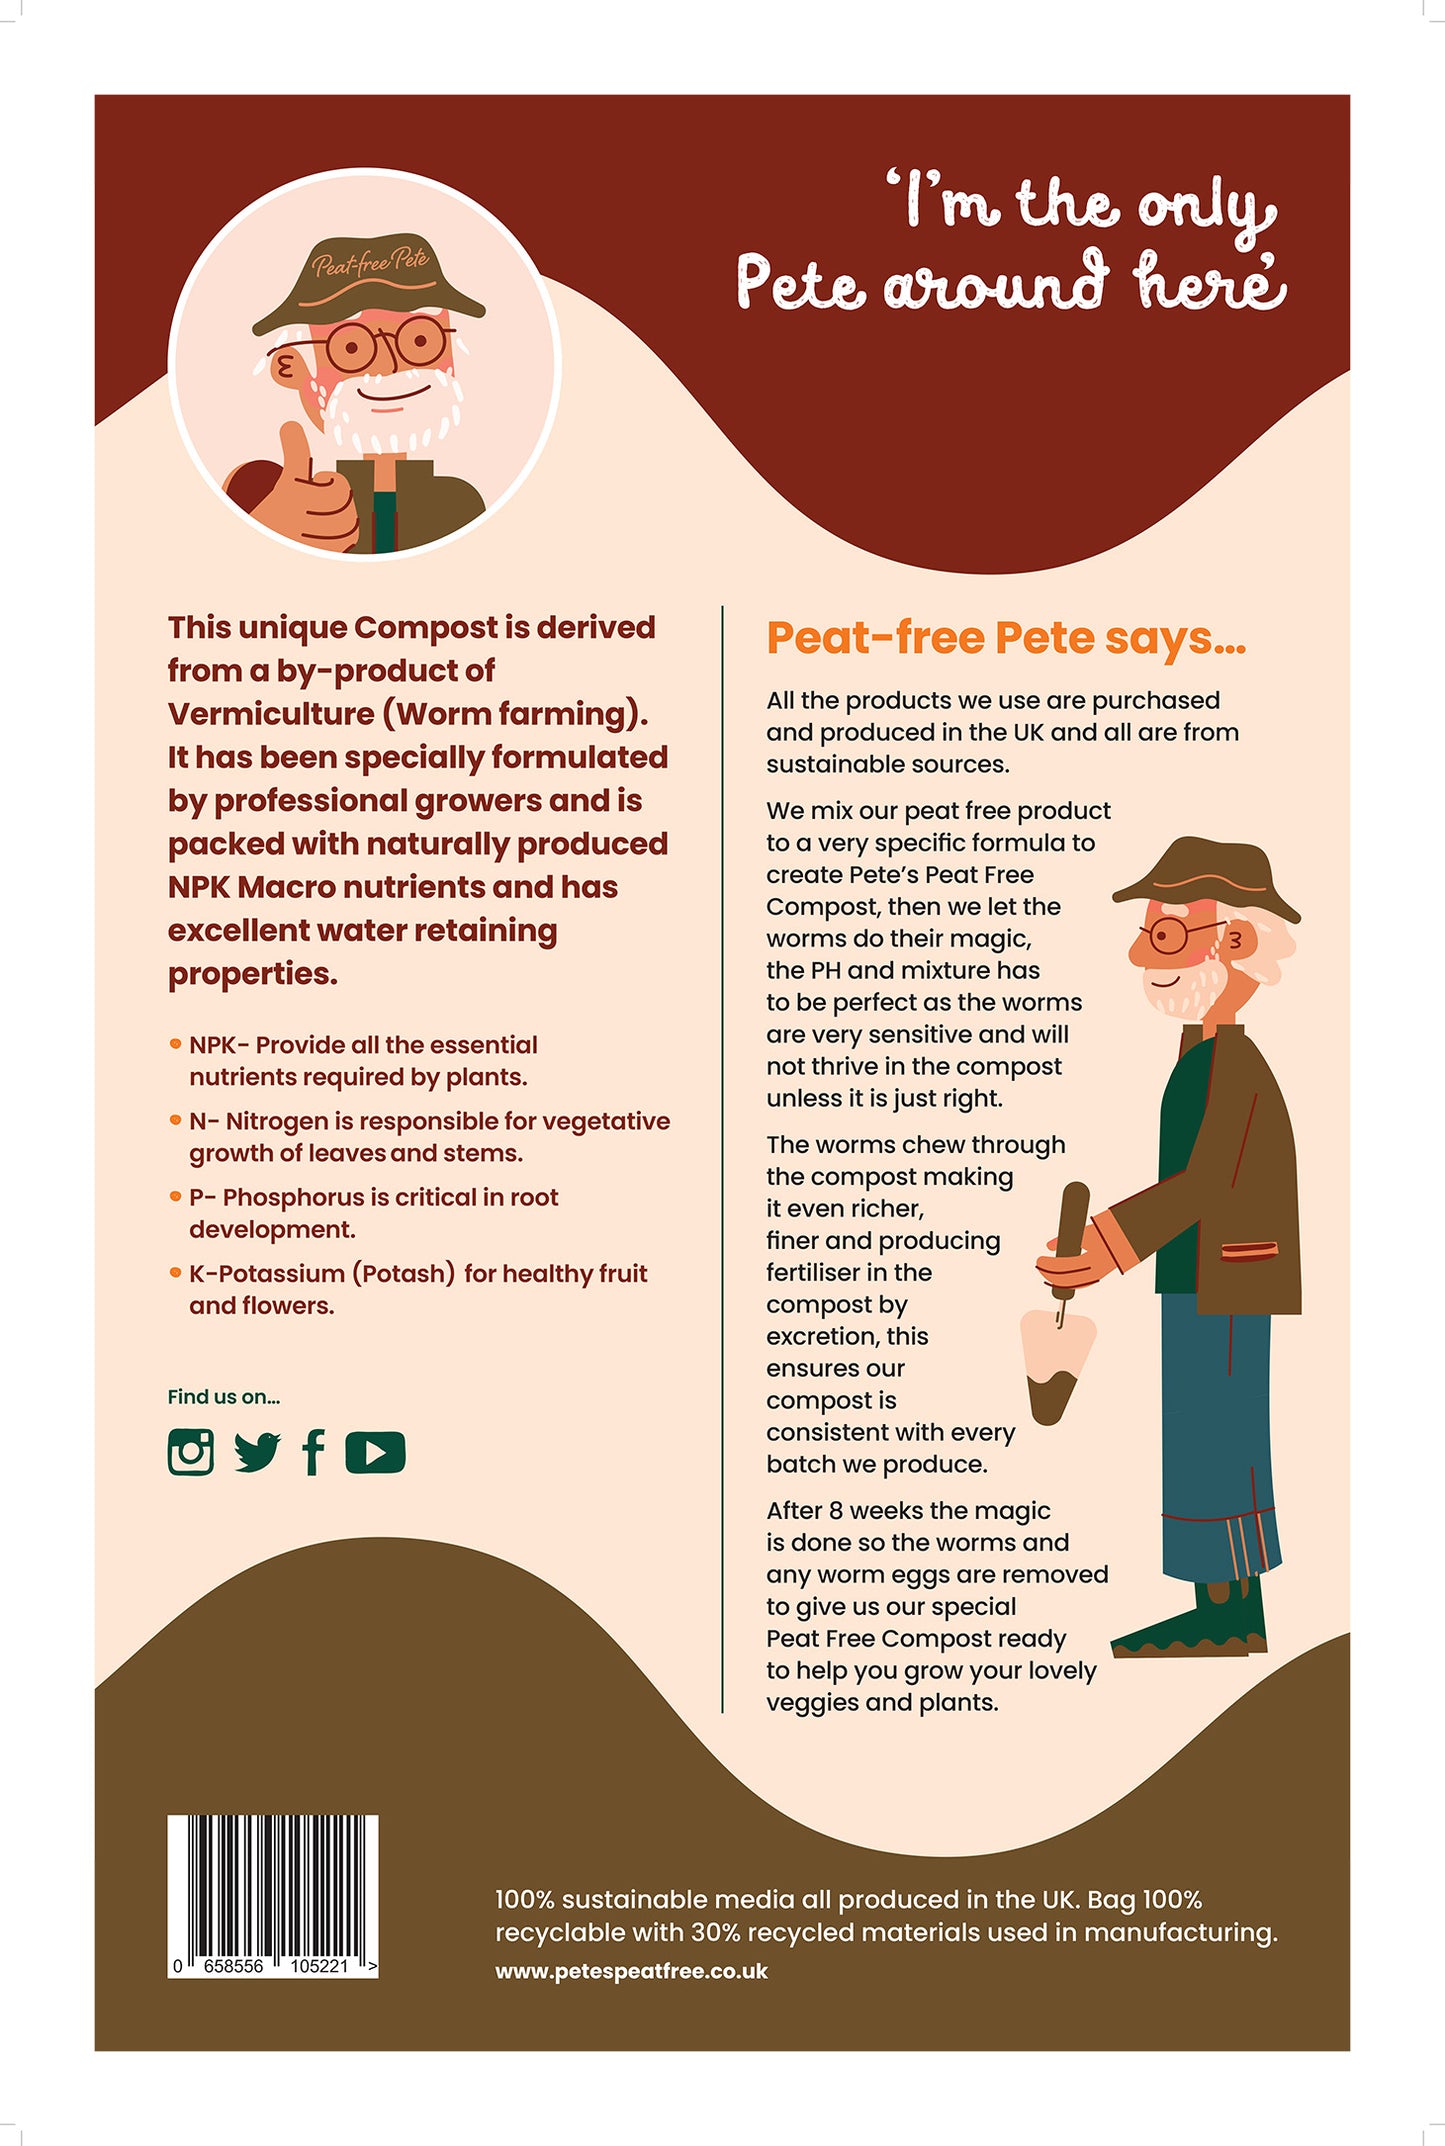 Pete's Peat Free Multipurpose Compost 30ltr